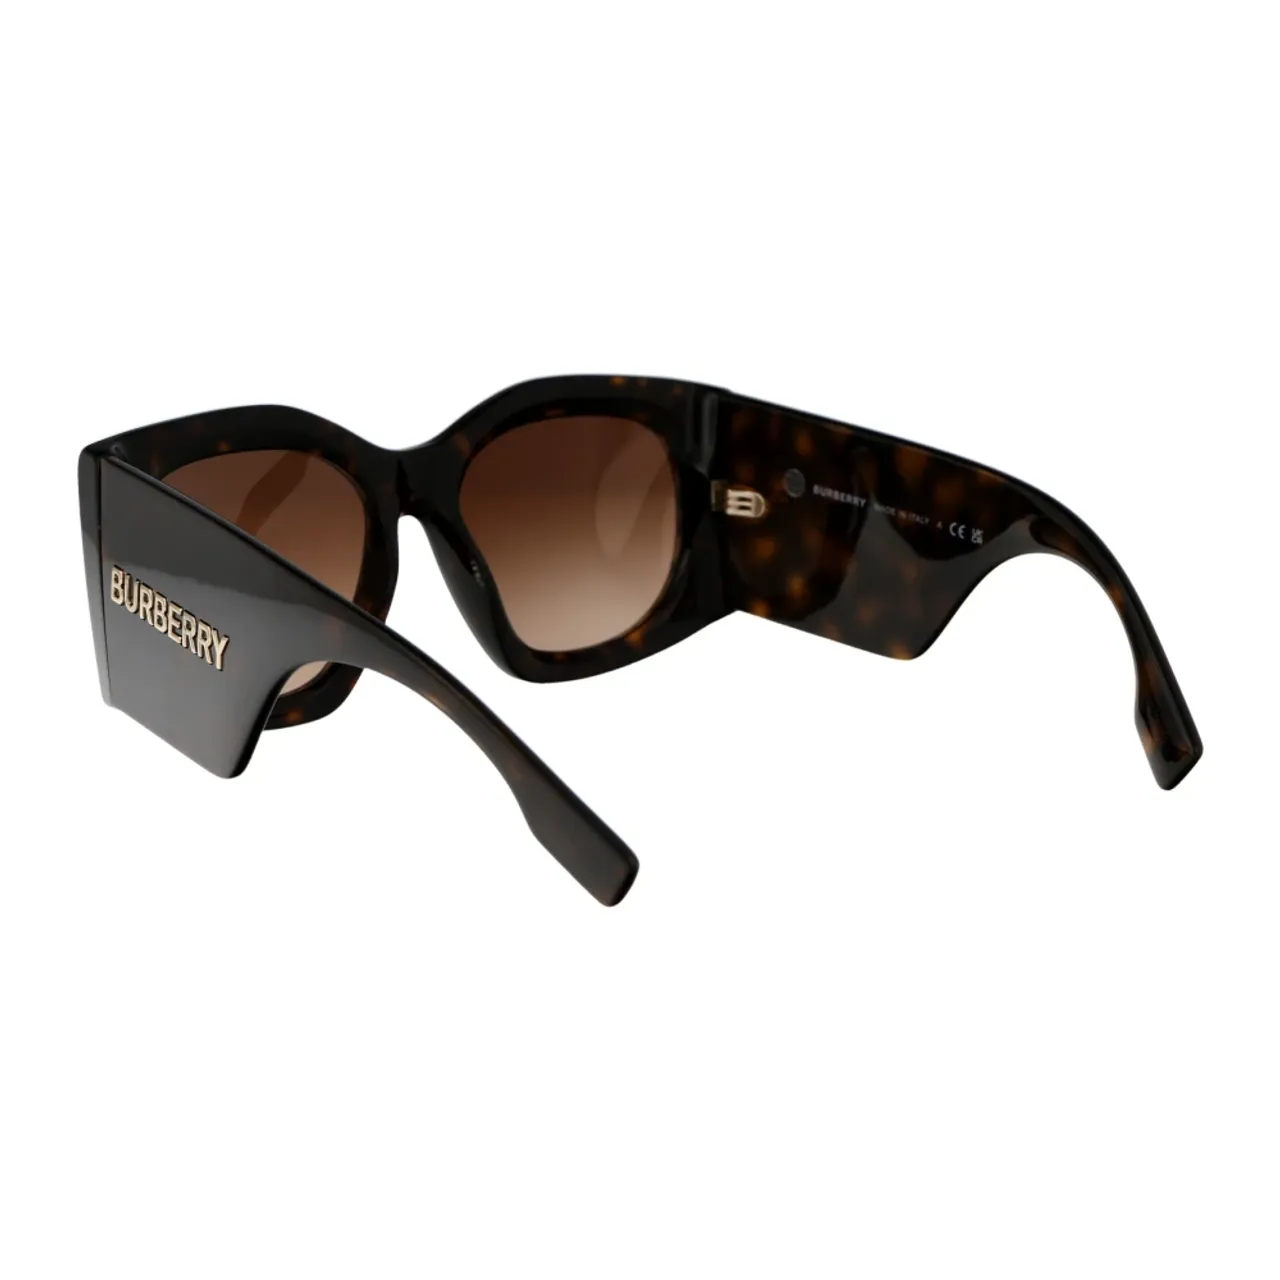 Stilvolle Madeline Sonnenbrille für den Sommer Burberry